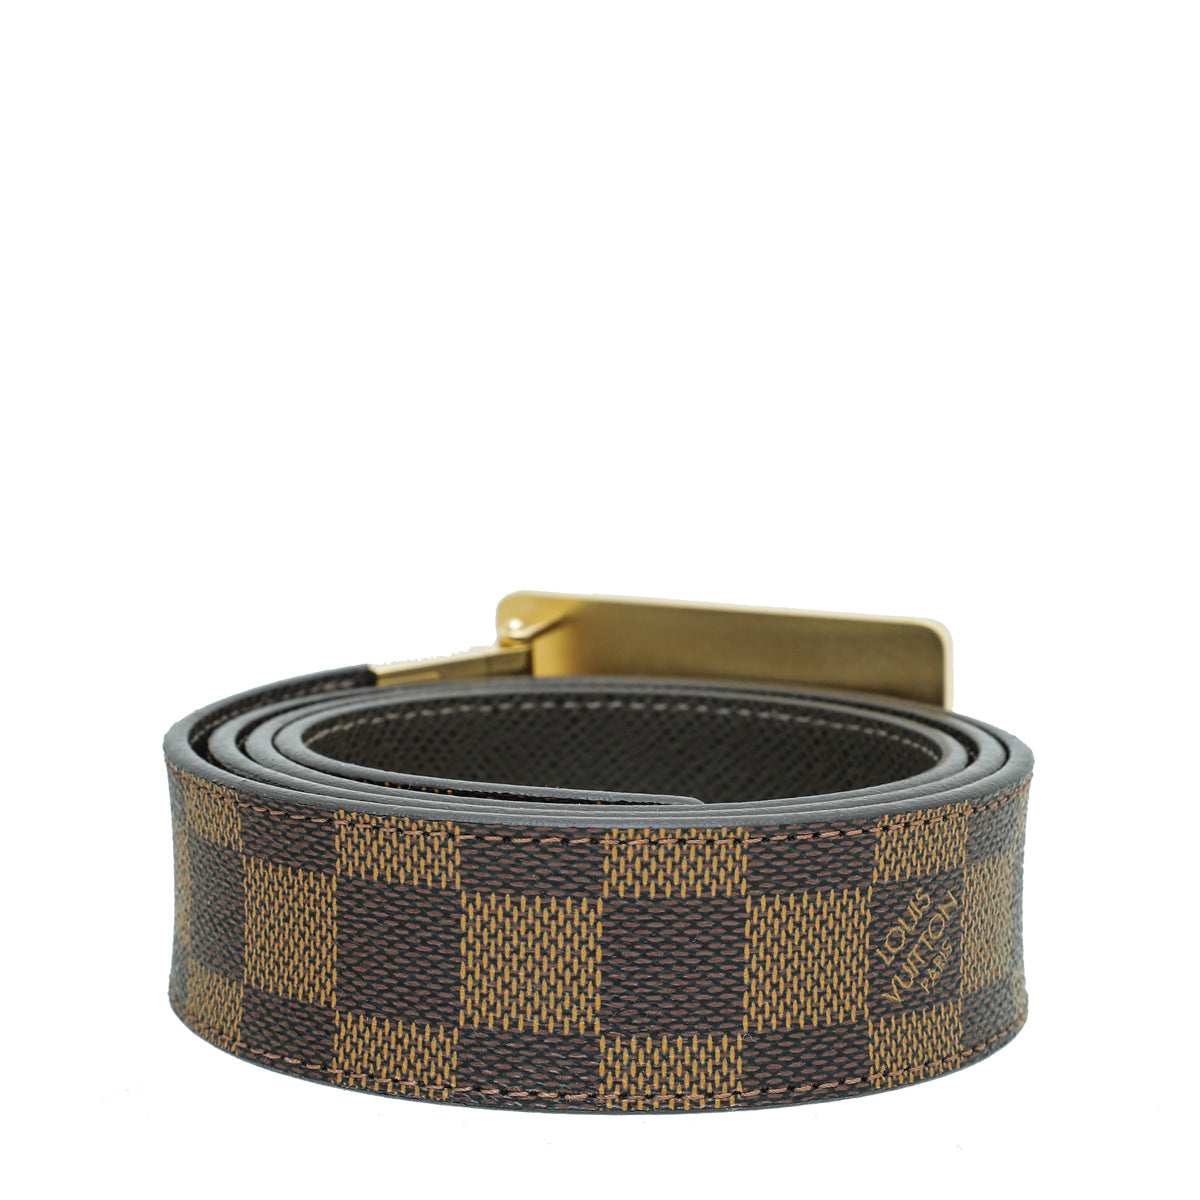 Louis Vuitton 2017 Neo Inventeur Reversible Belt - Brown Belts